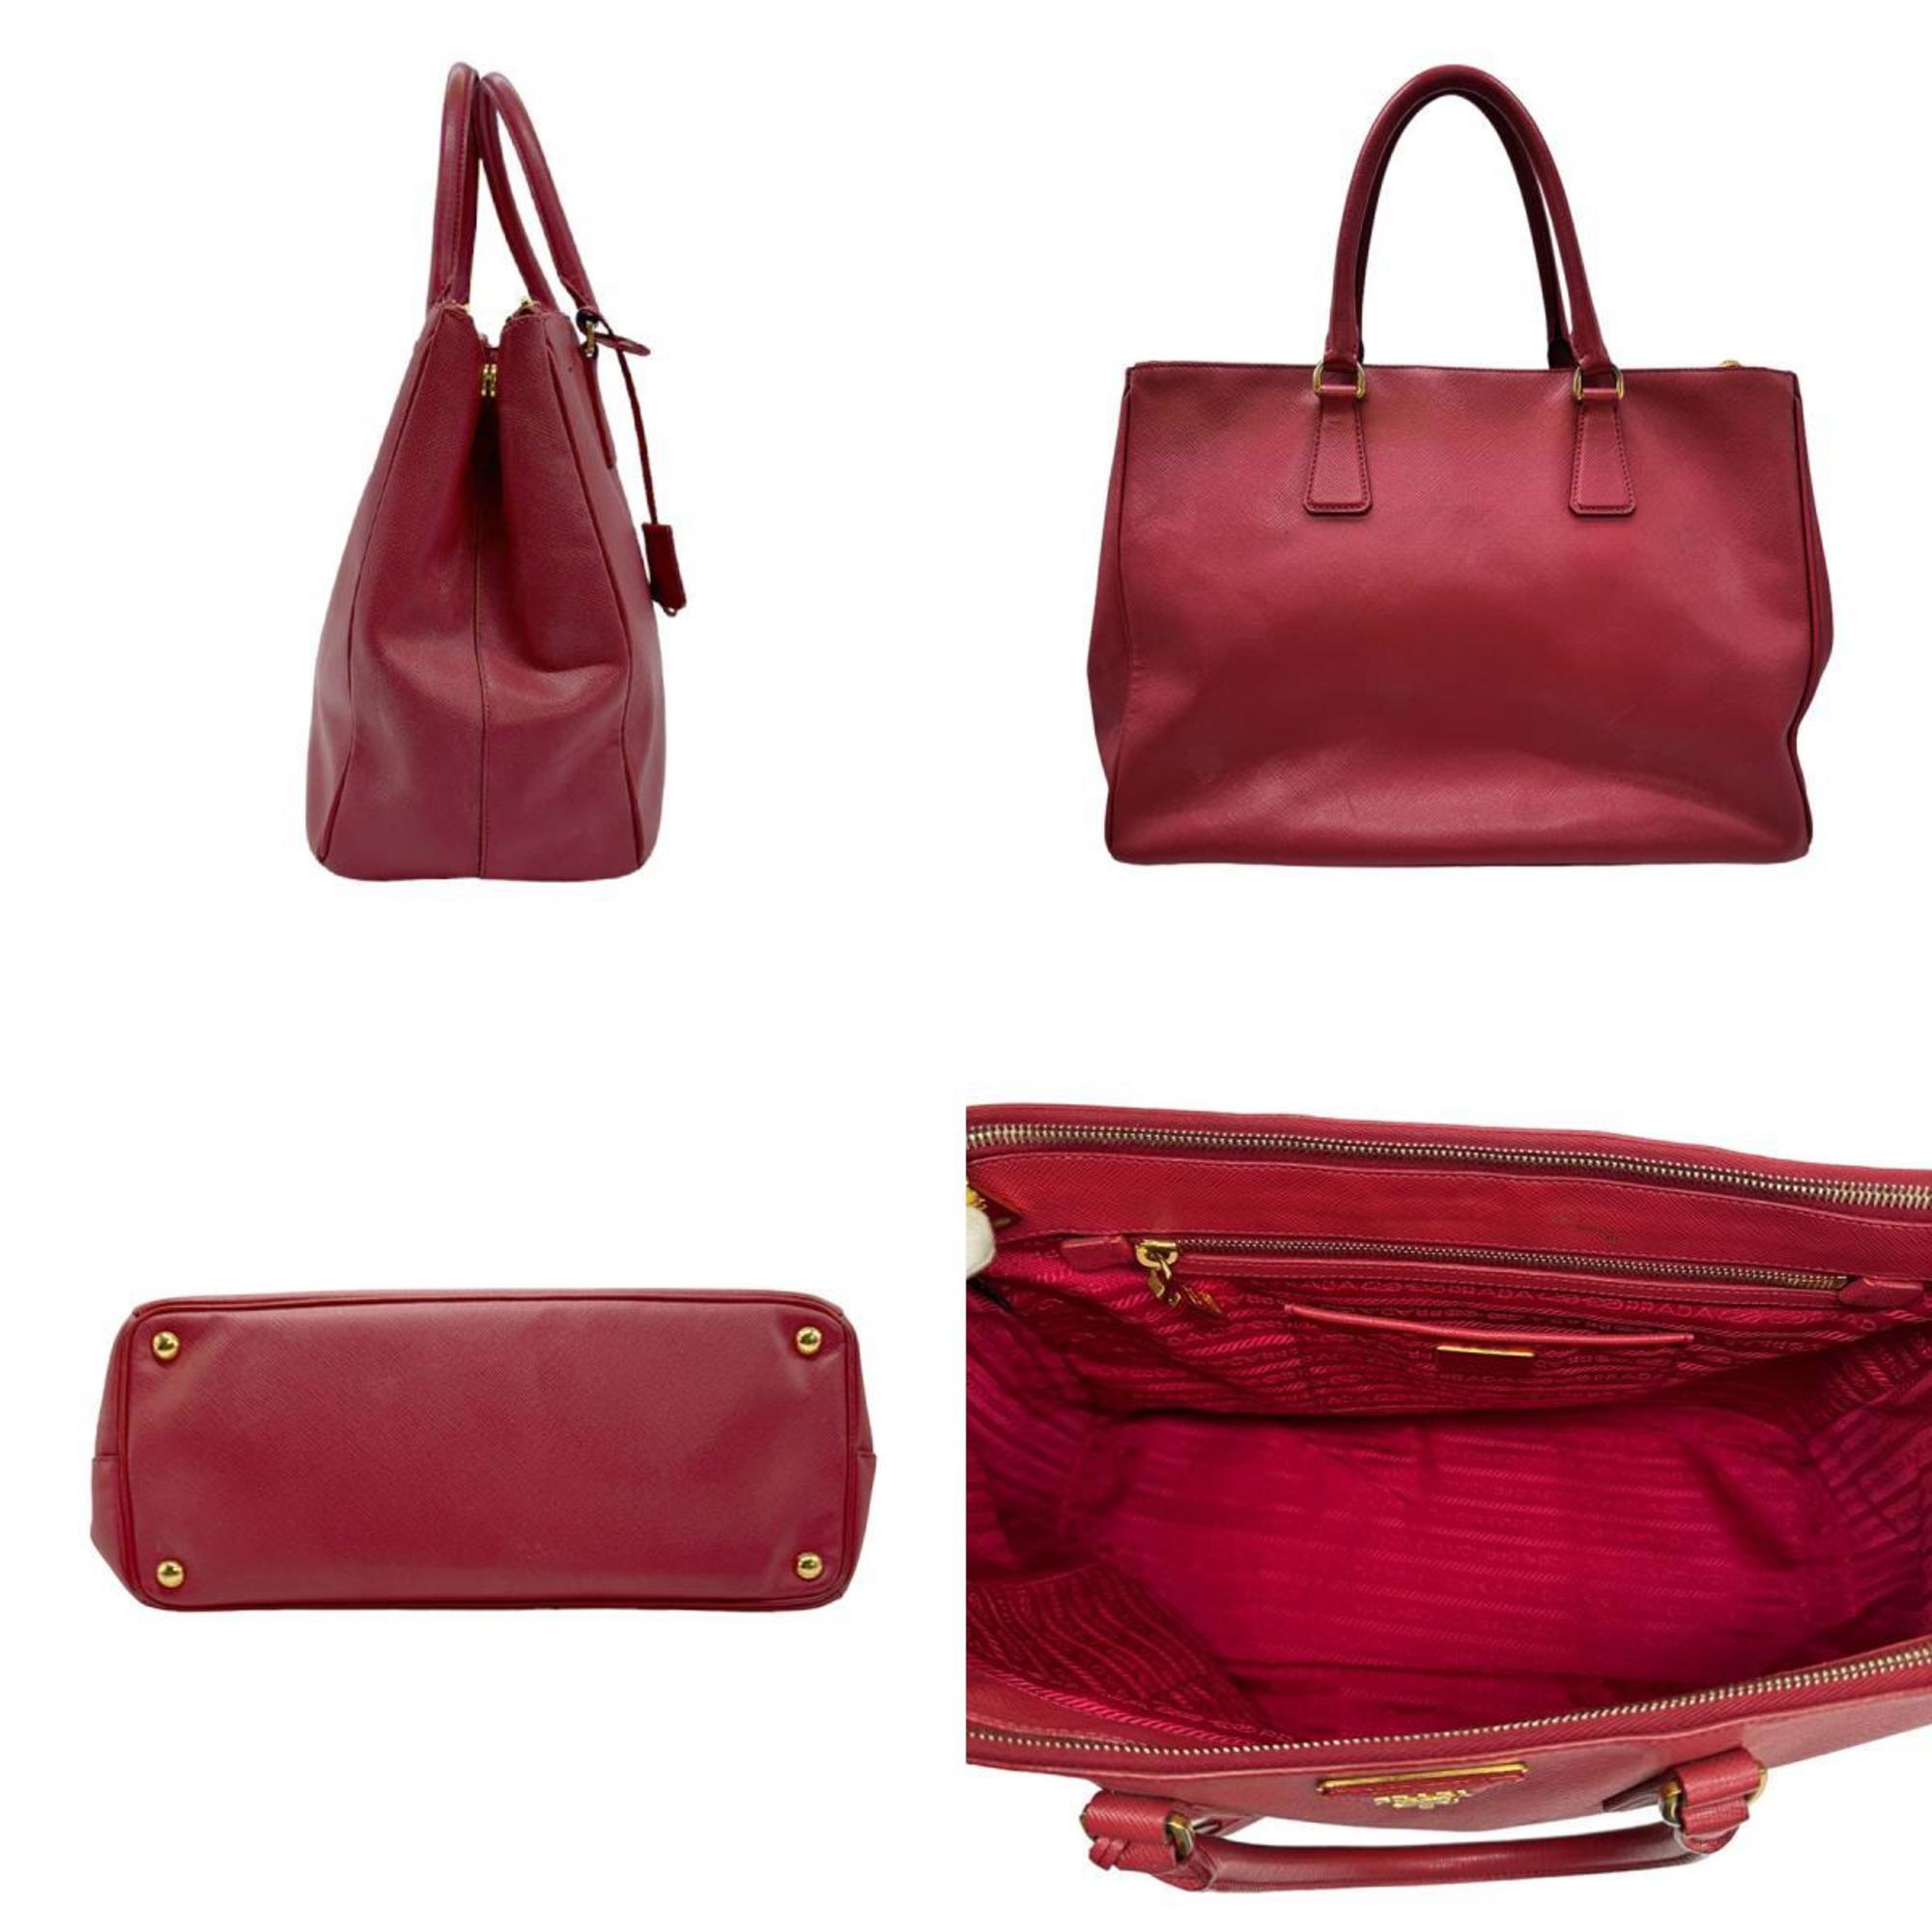 PRADA handbag leather red gold ladies z0680